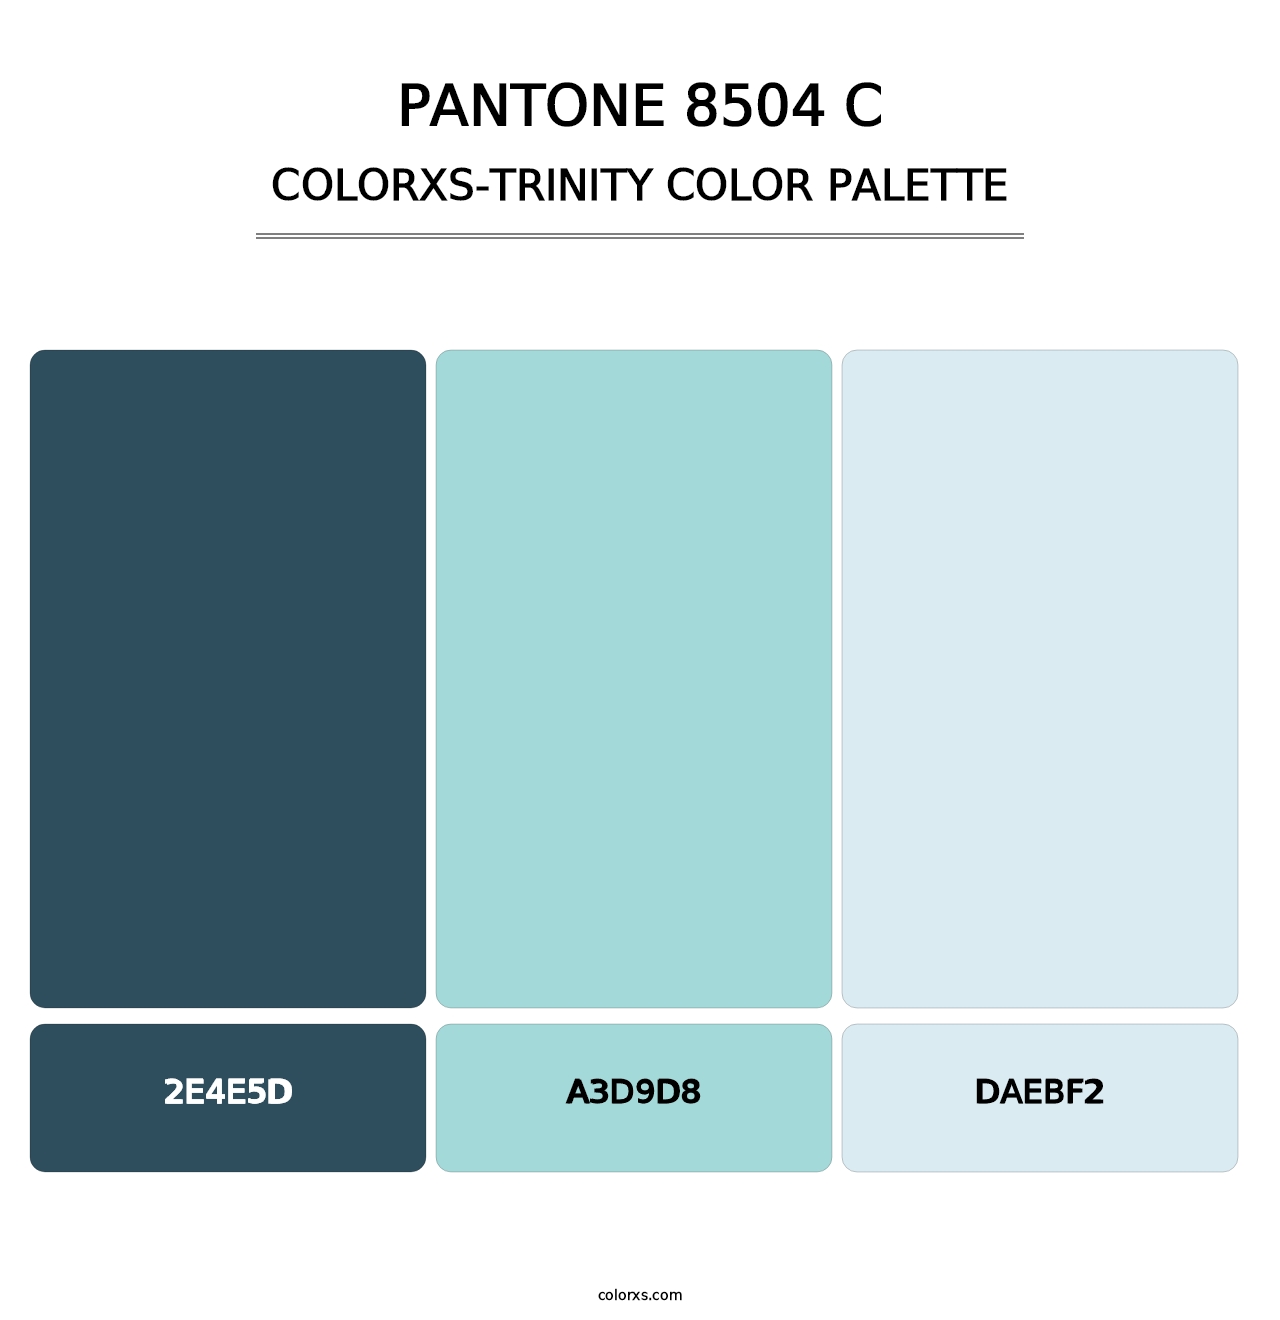 PANTONE 8504 C - Colorxs Trinity Palette